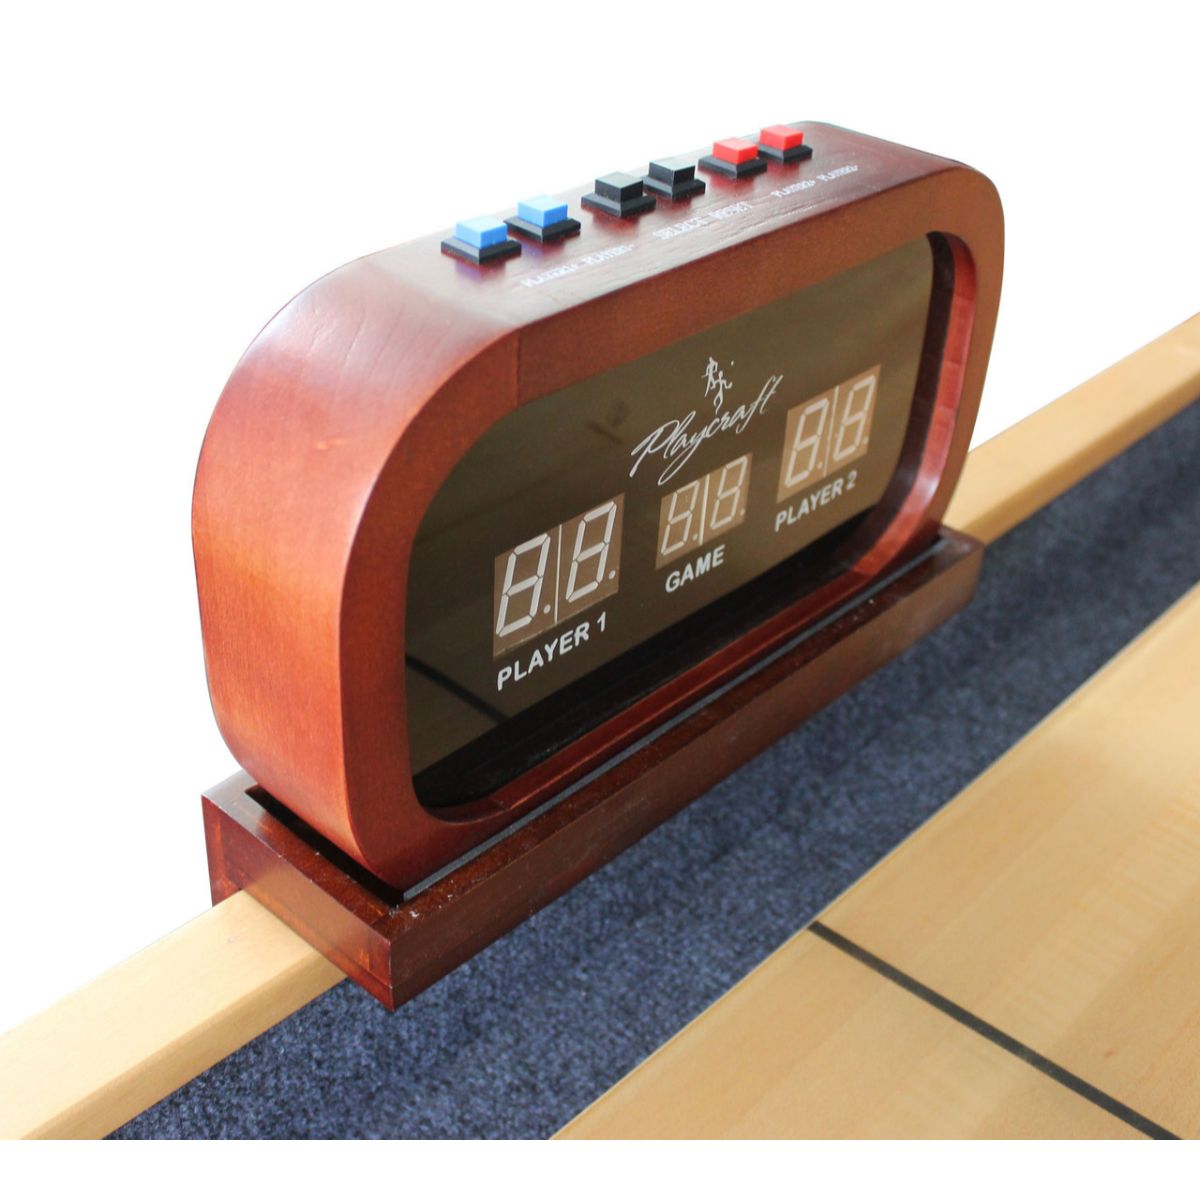 Playcraft Electronic Scorer for Home Recreation Shuffleboard Table - Upper Livin